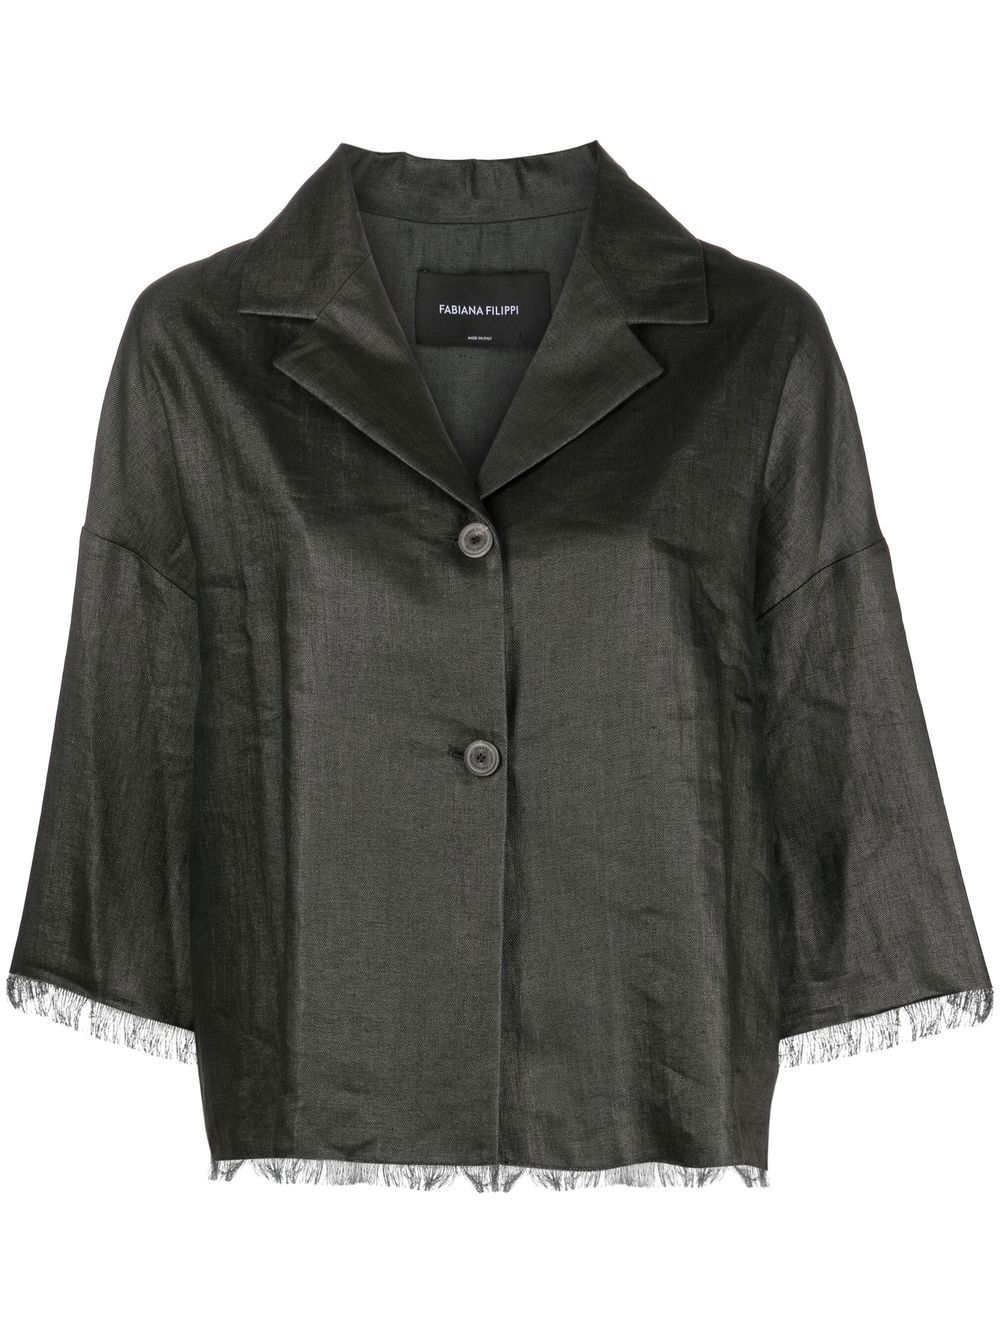 Fabiana Filippi frayed buttoned jacket - Grey von Fabiana Filippi